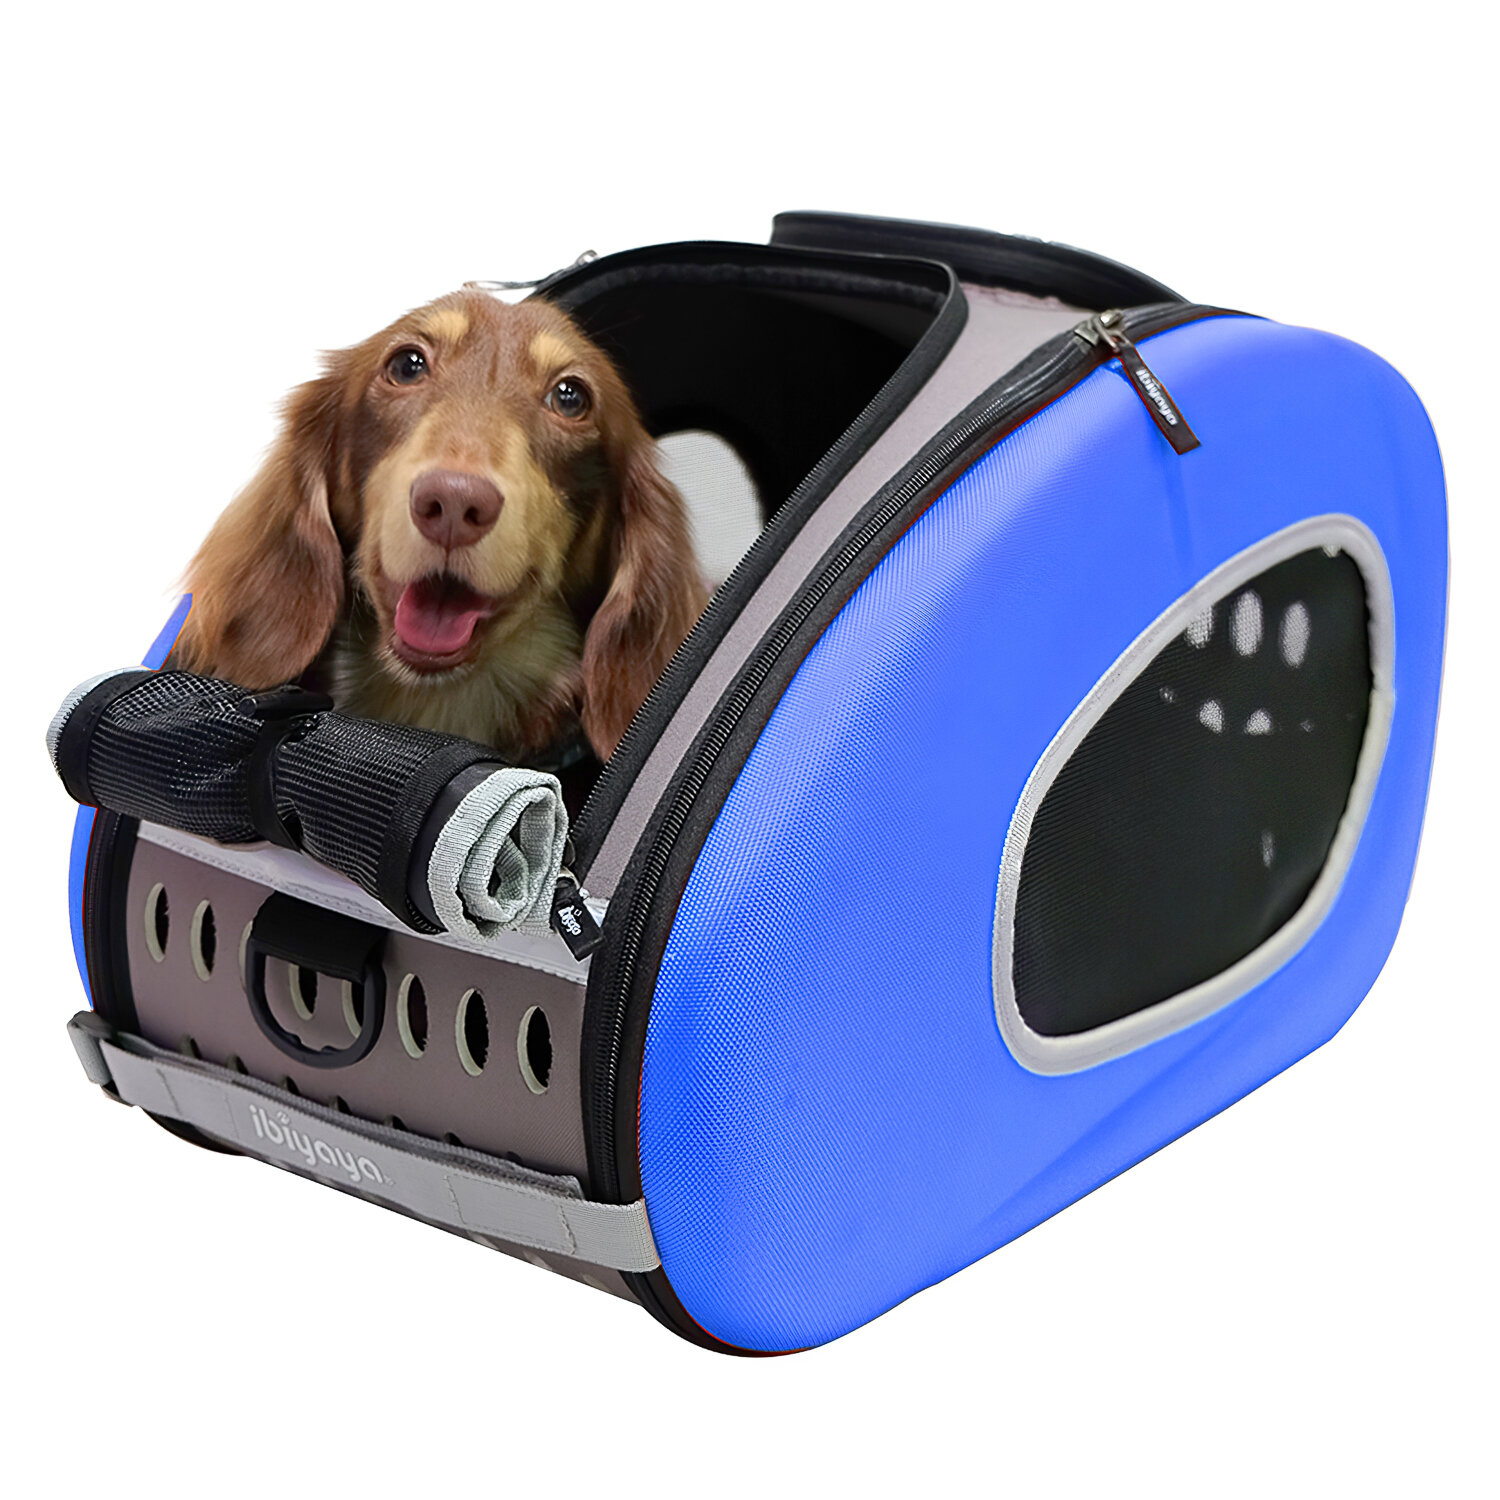 Сумка-тележка Ibiyaya для собак складная, до 8 кг, 3 в 1 (сумка, рюкзак, тележка), цвет: синий, 58x30x34 см - фото №14